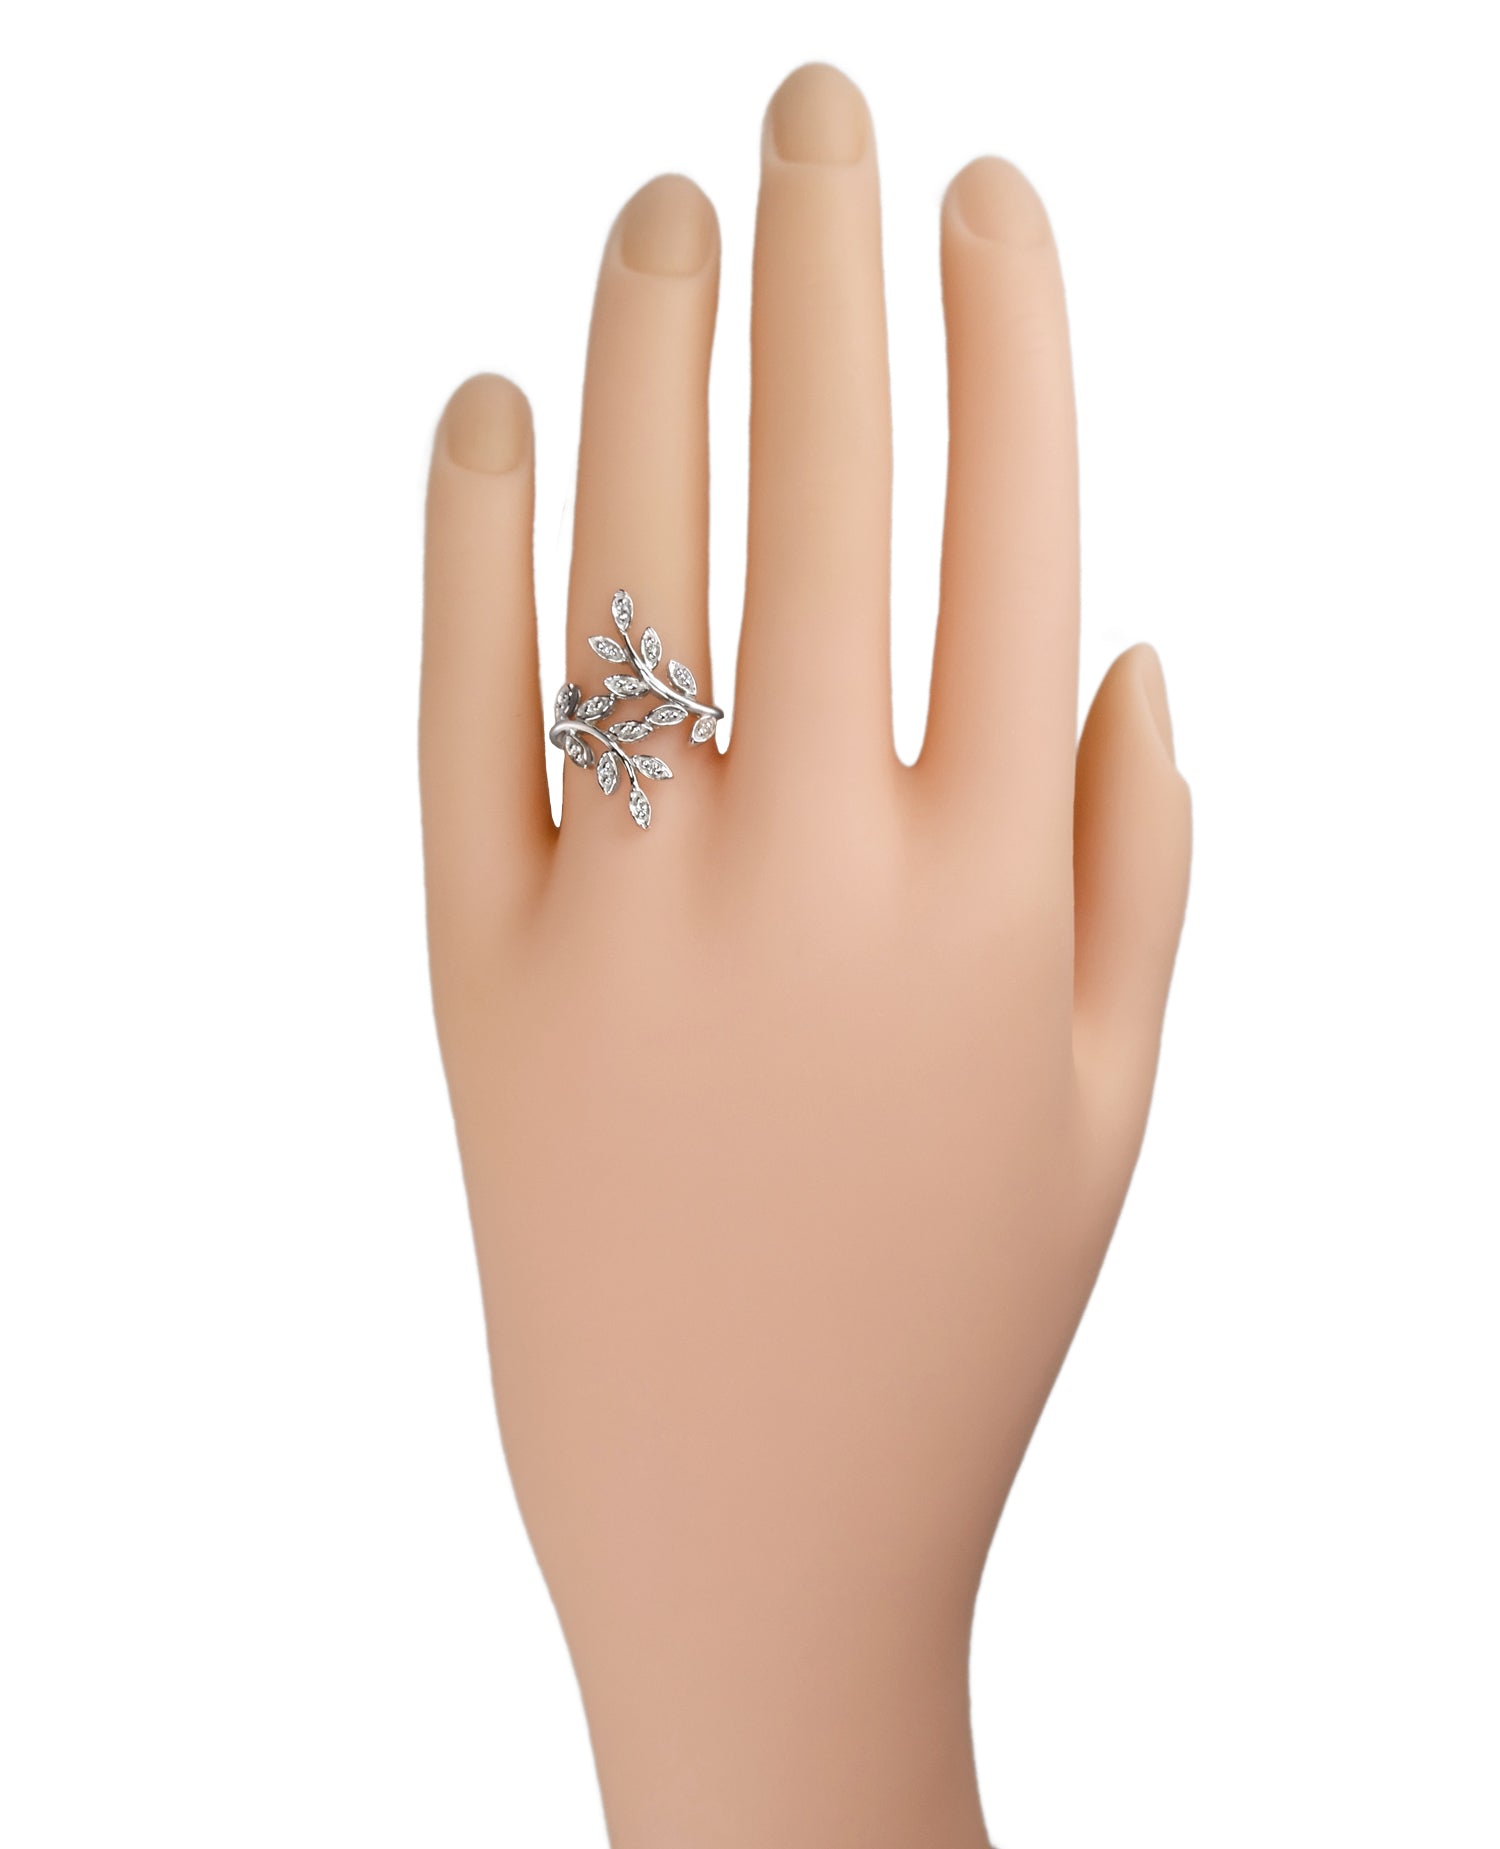 1970's Vintage Free Form Diamond Leaves Ring in 14 Karat White Gold - Item: R790 - Image: 3